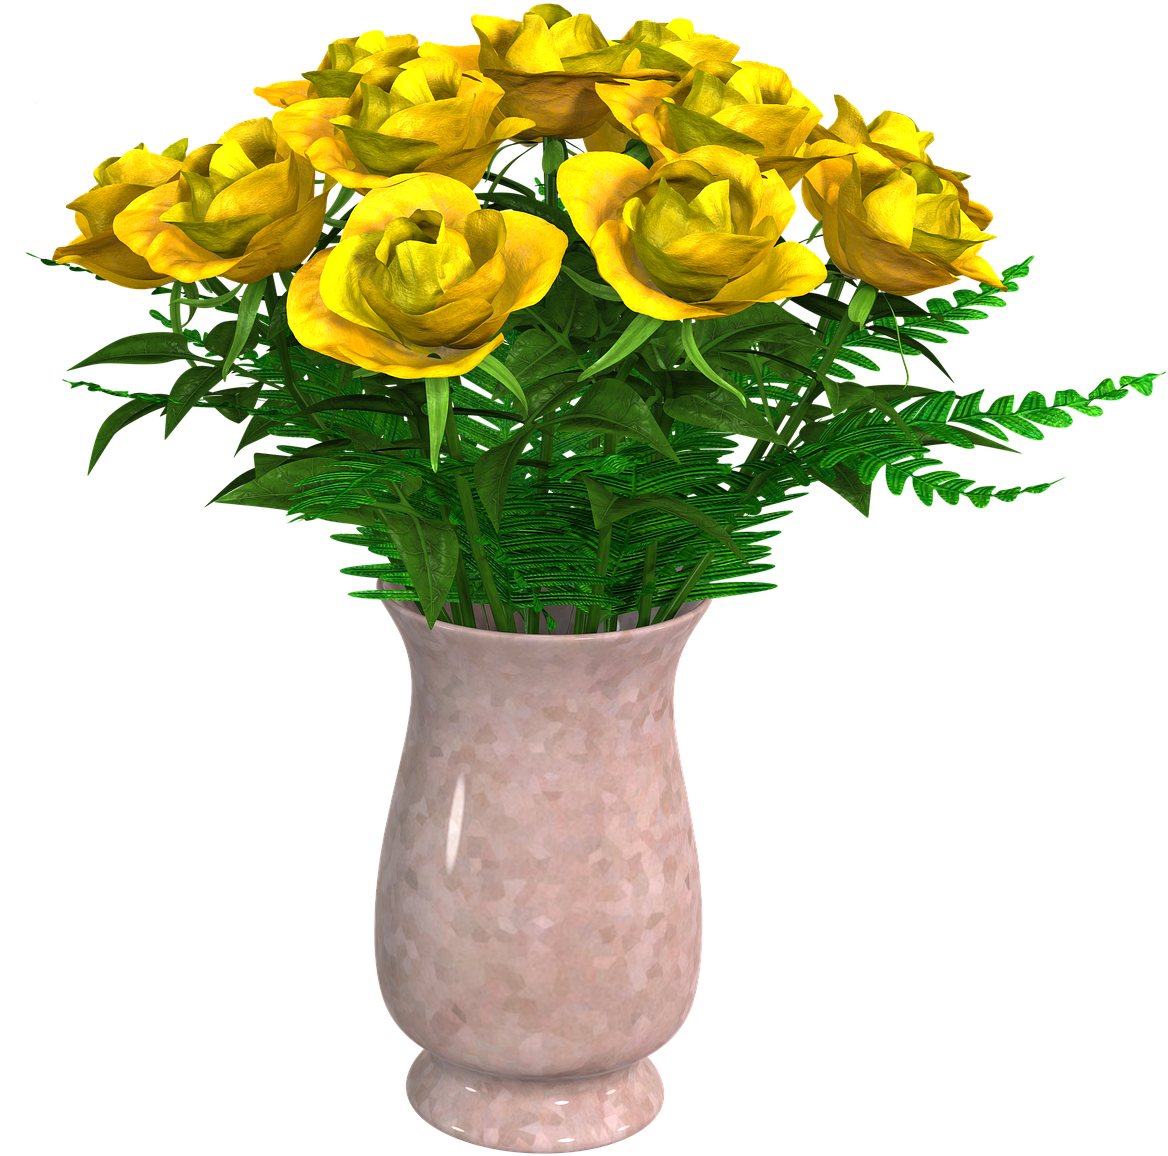 Vase Png 1168 X 1156